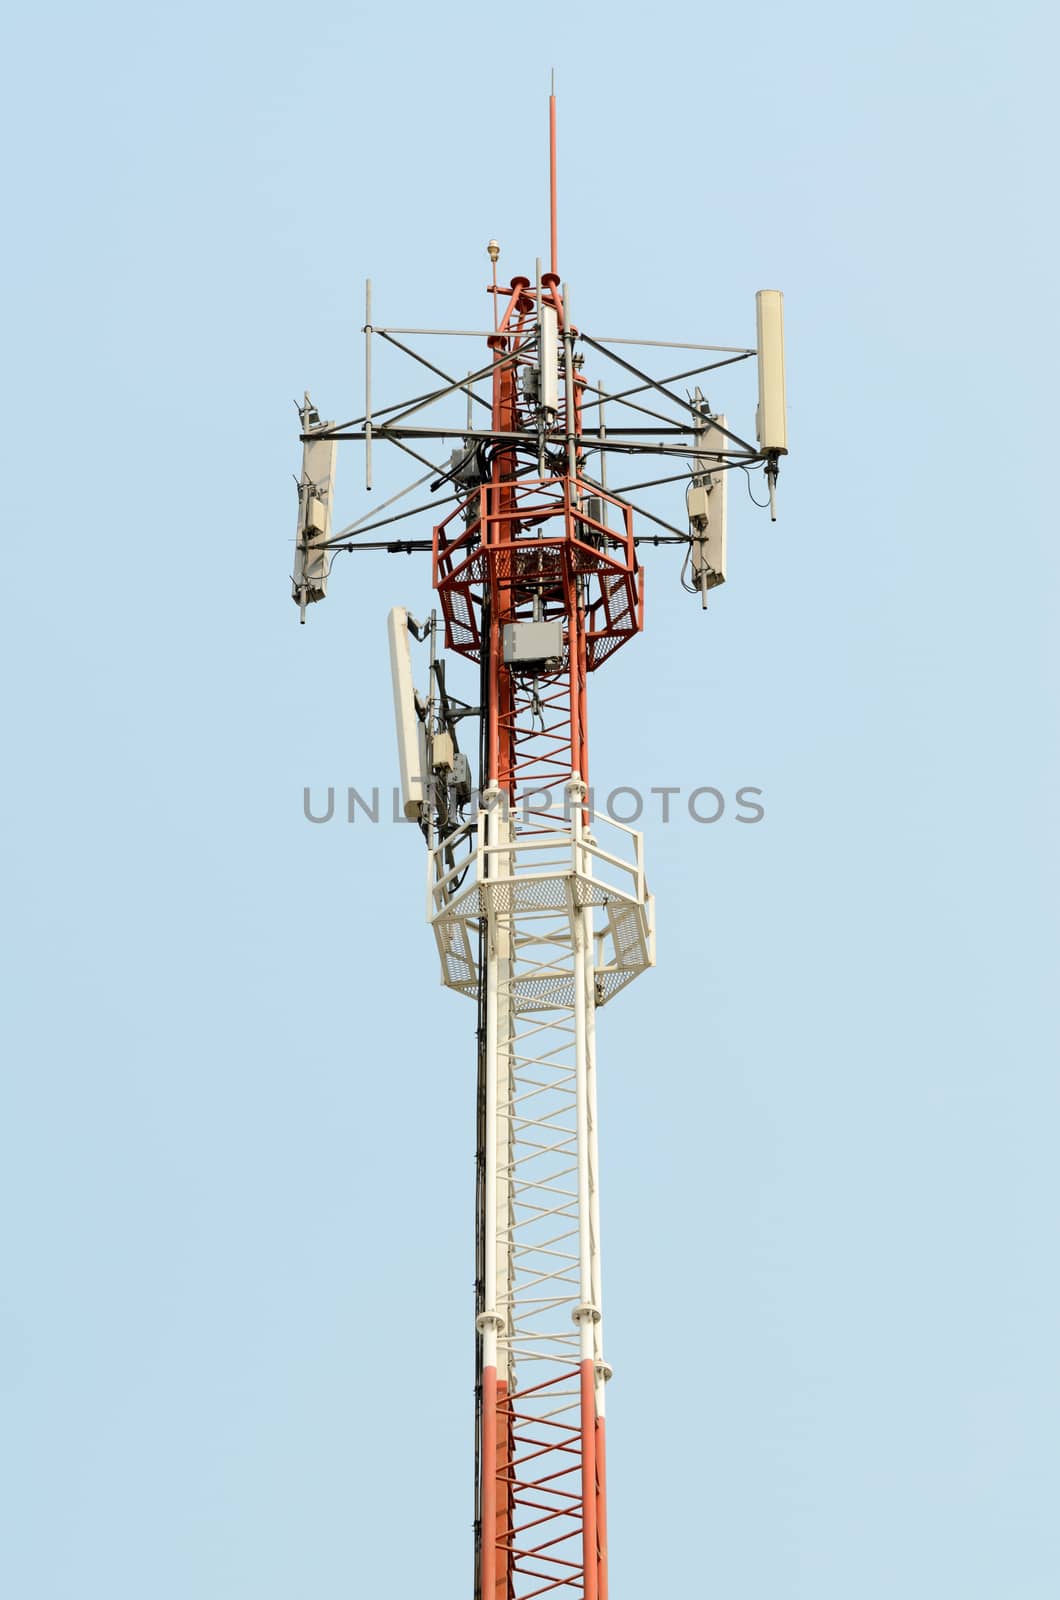 Antenna on the telecommunication tower by hatoriz